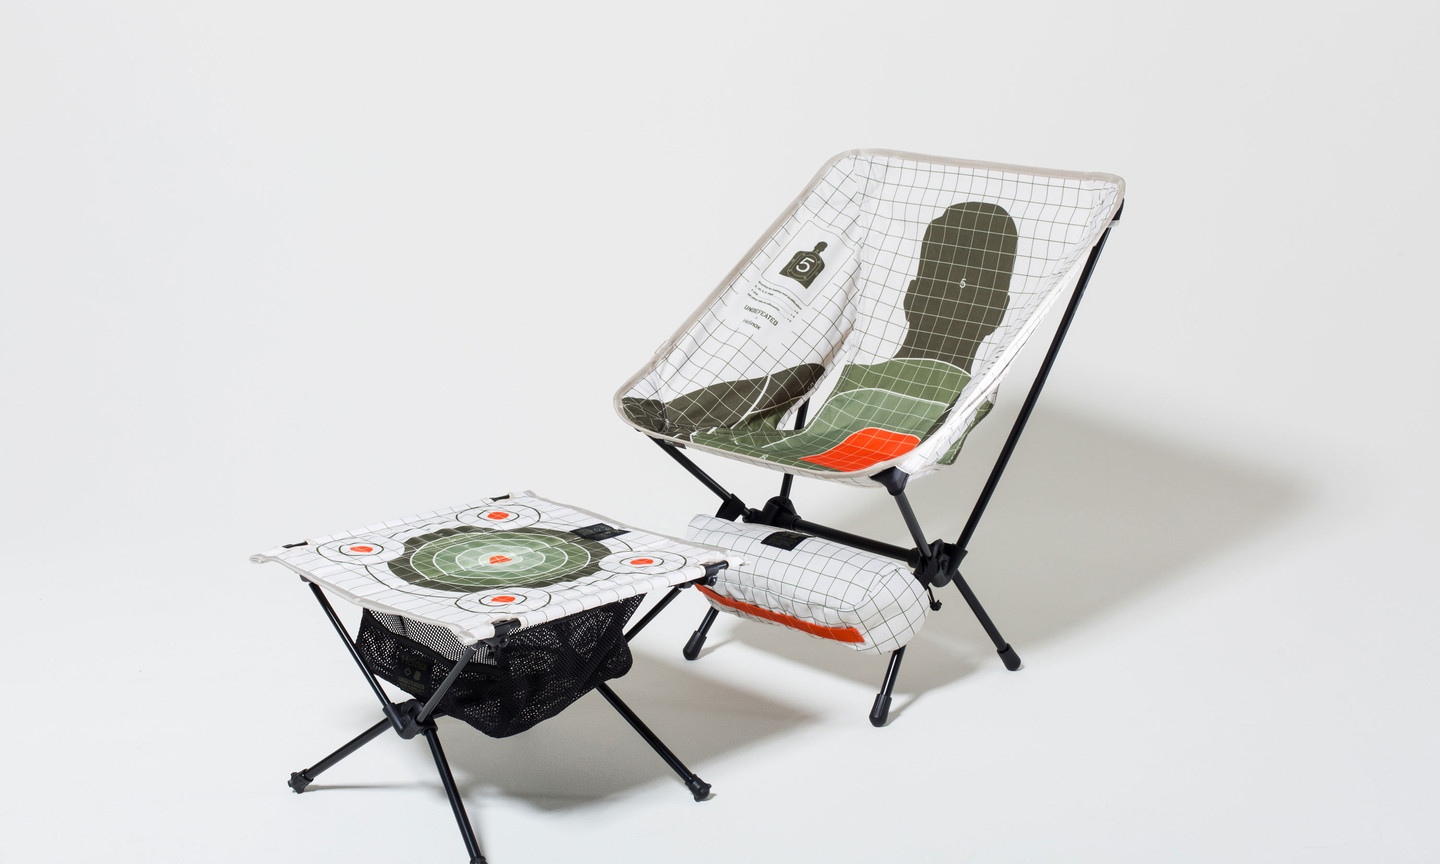 UNDEFEATED 联手 Helinox 推出折叠桌椅胶囊系列